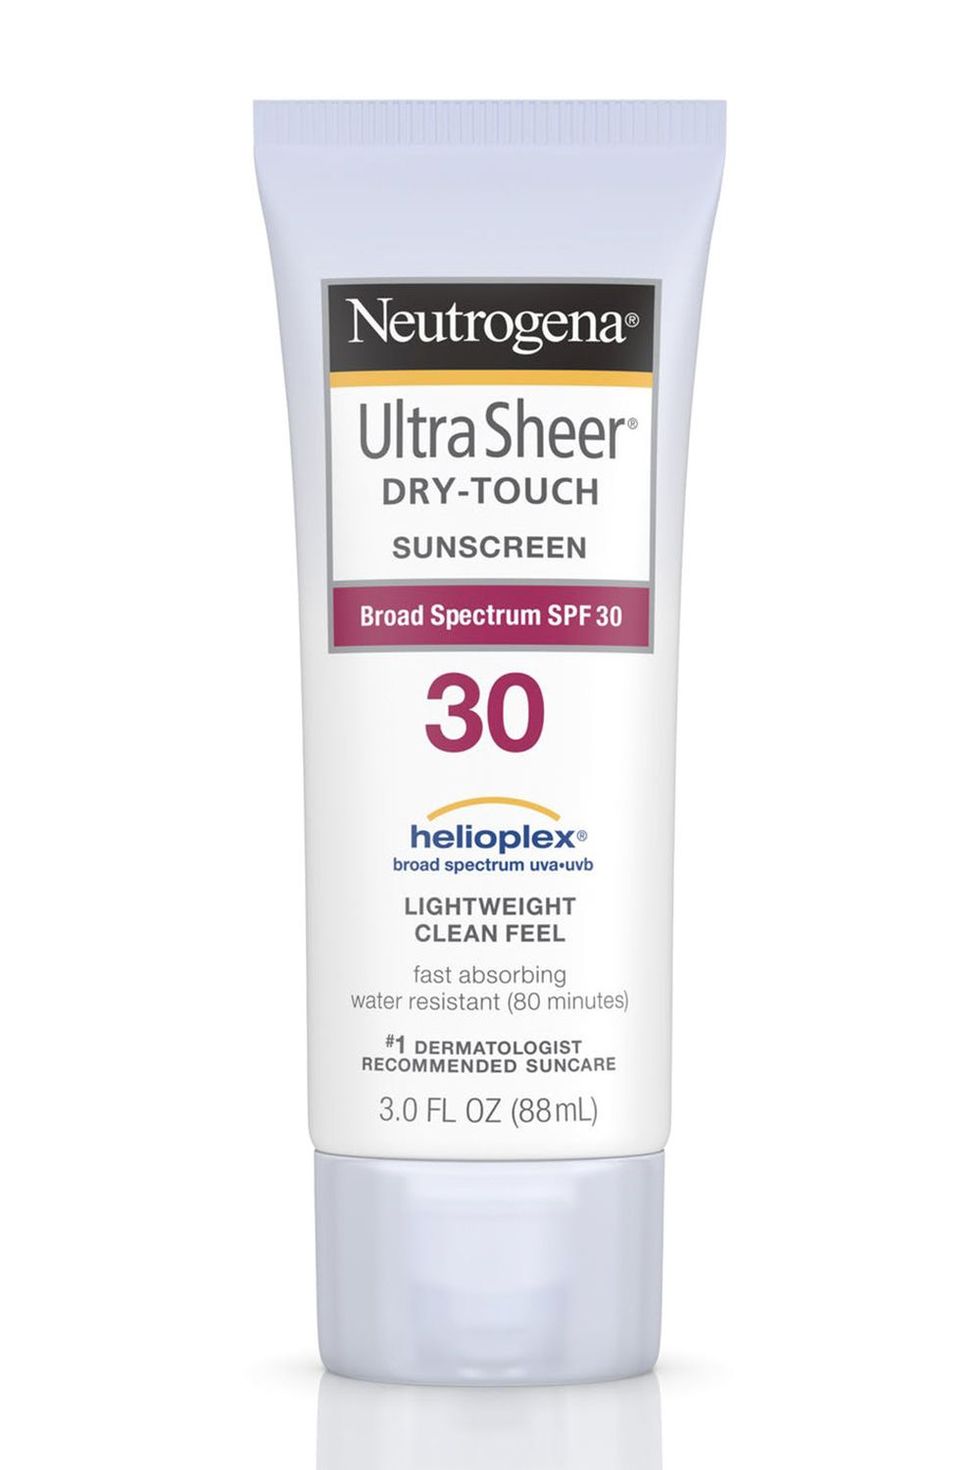 Neutrogena Ultra Sheer Dry-Touch Sunscreen Broad Spectrum SPF 30